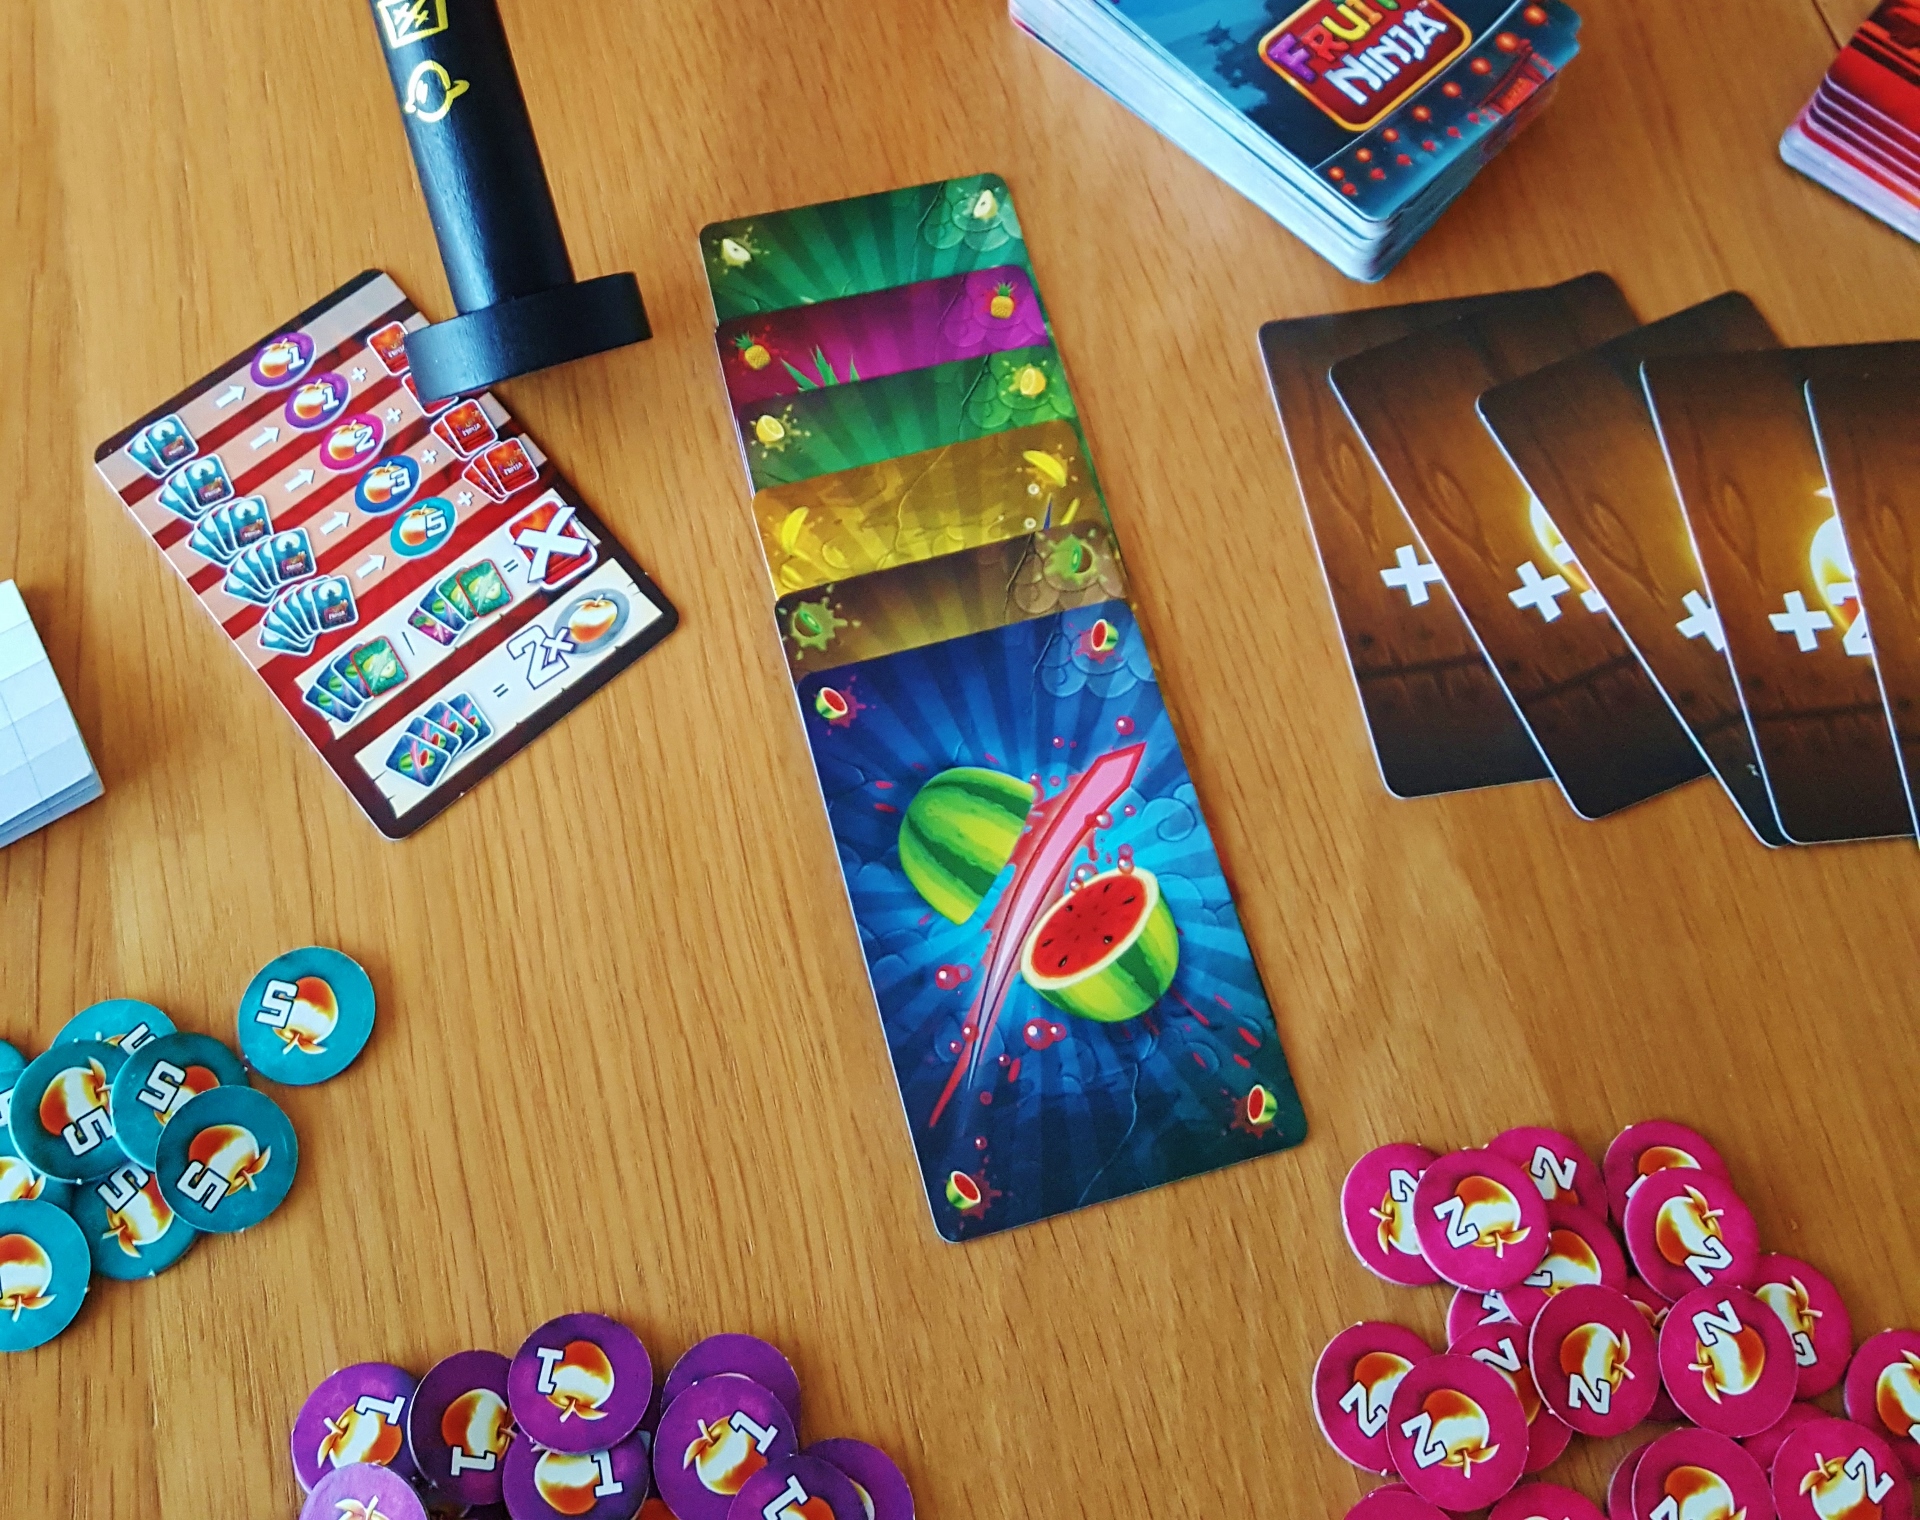 Fruit Ninja: Combo Party, Board Game